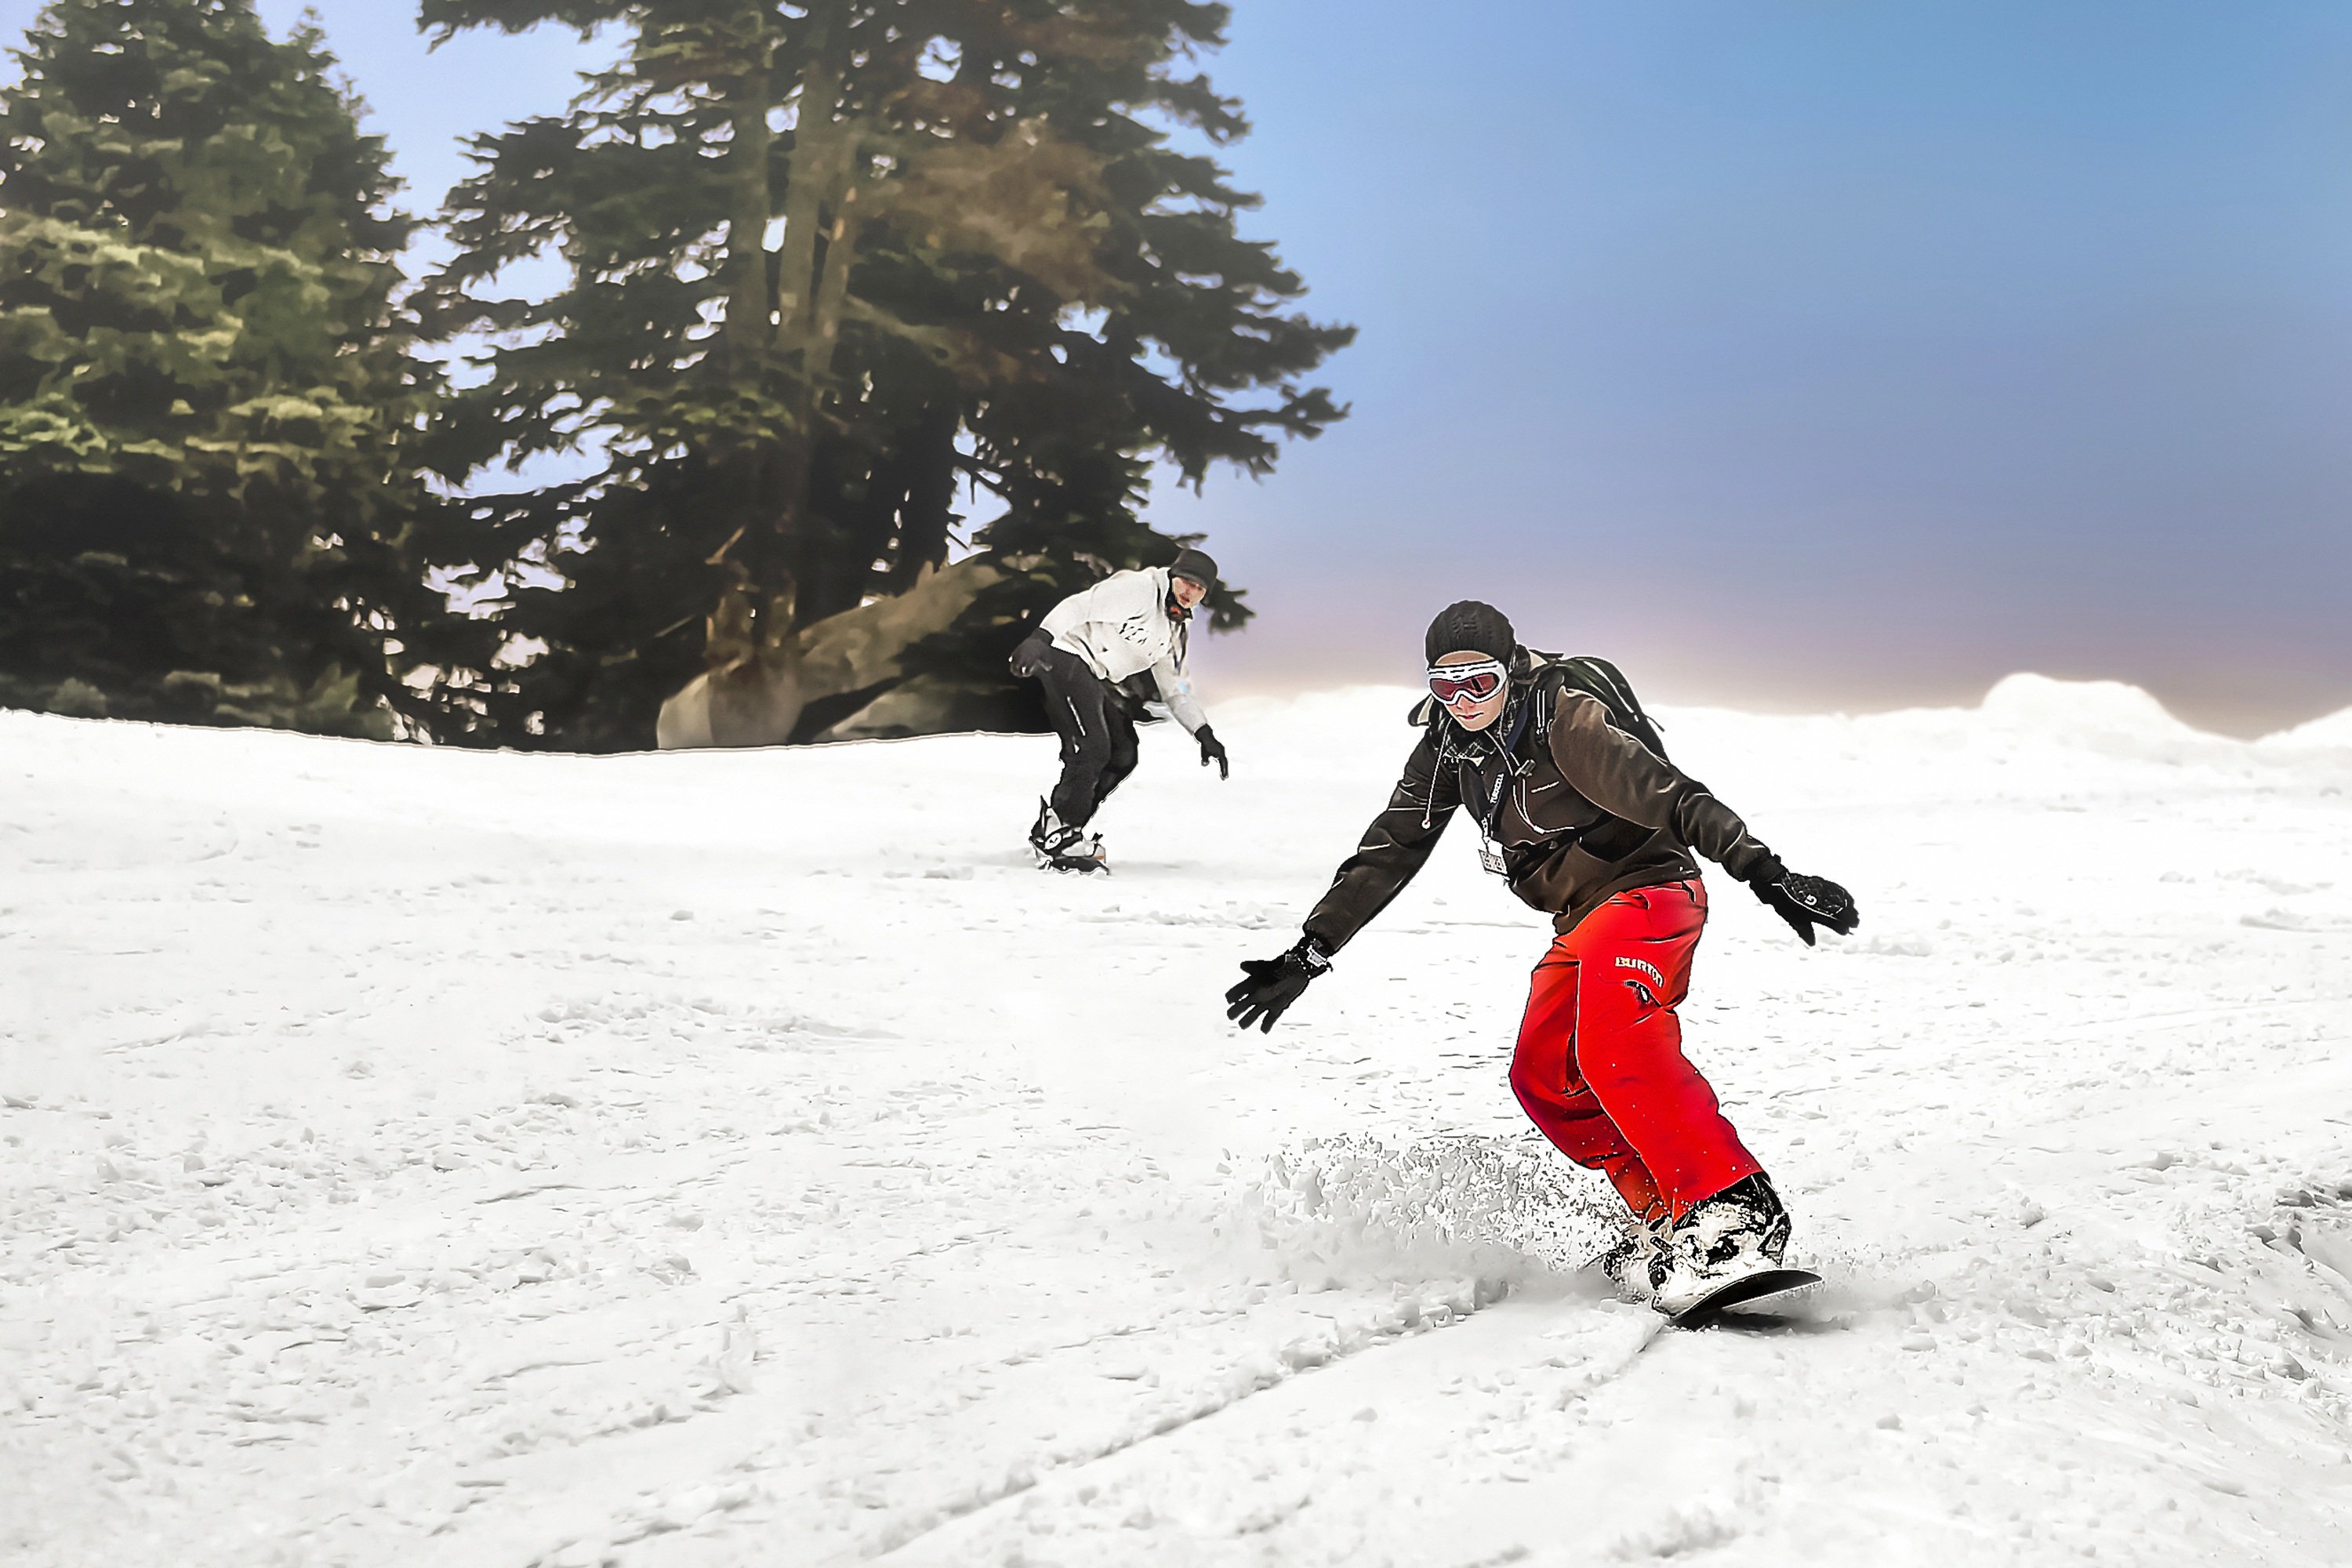 Go snowboarding. Сноуборд. Сноуборд в снегу. Катание на сноуборде. Катание на борде по песку.